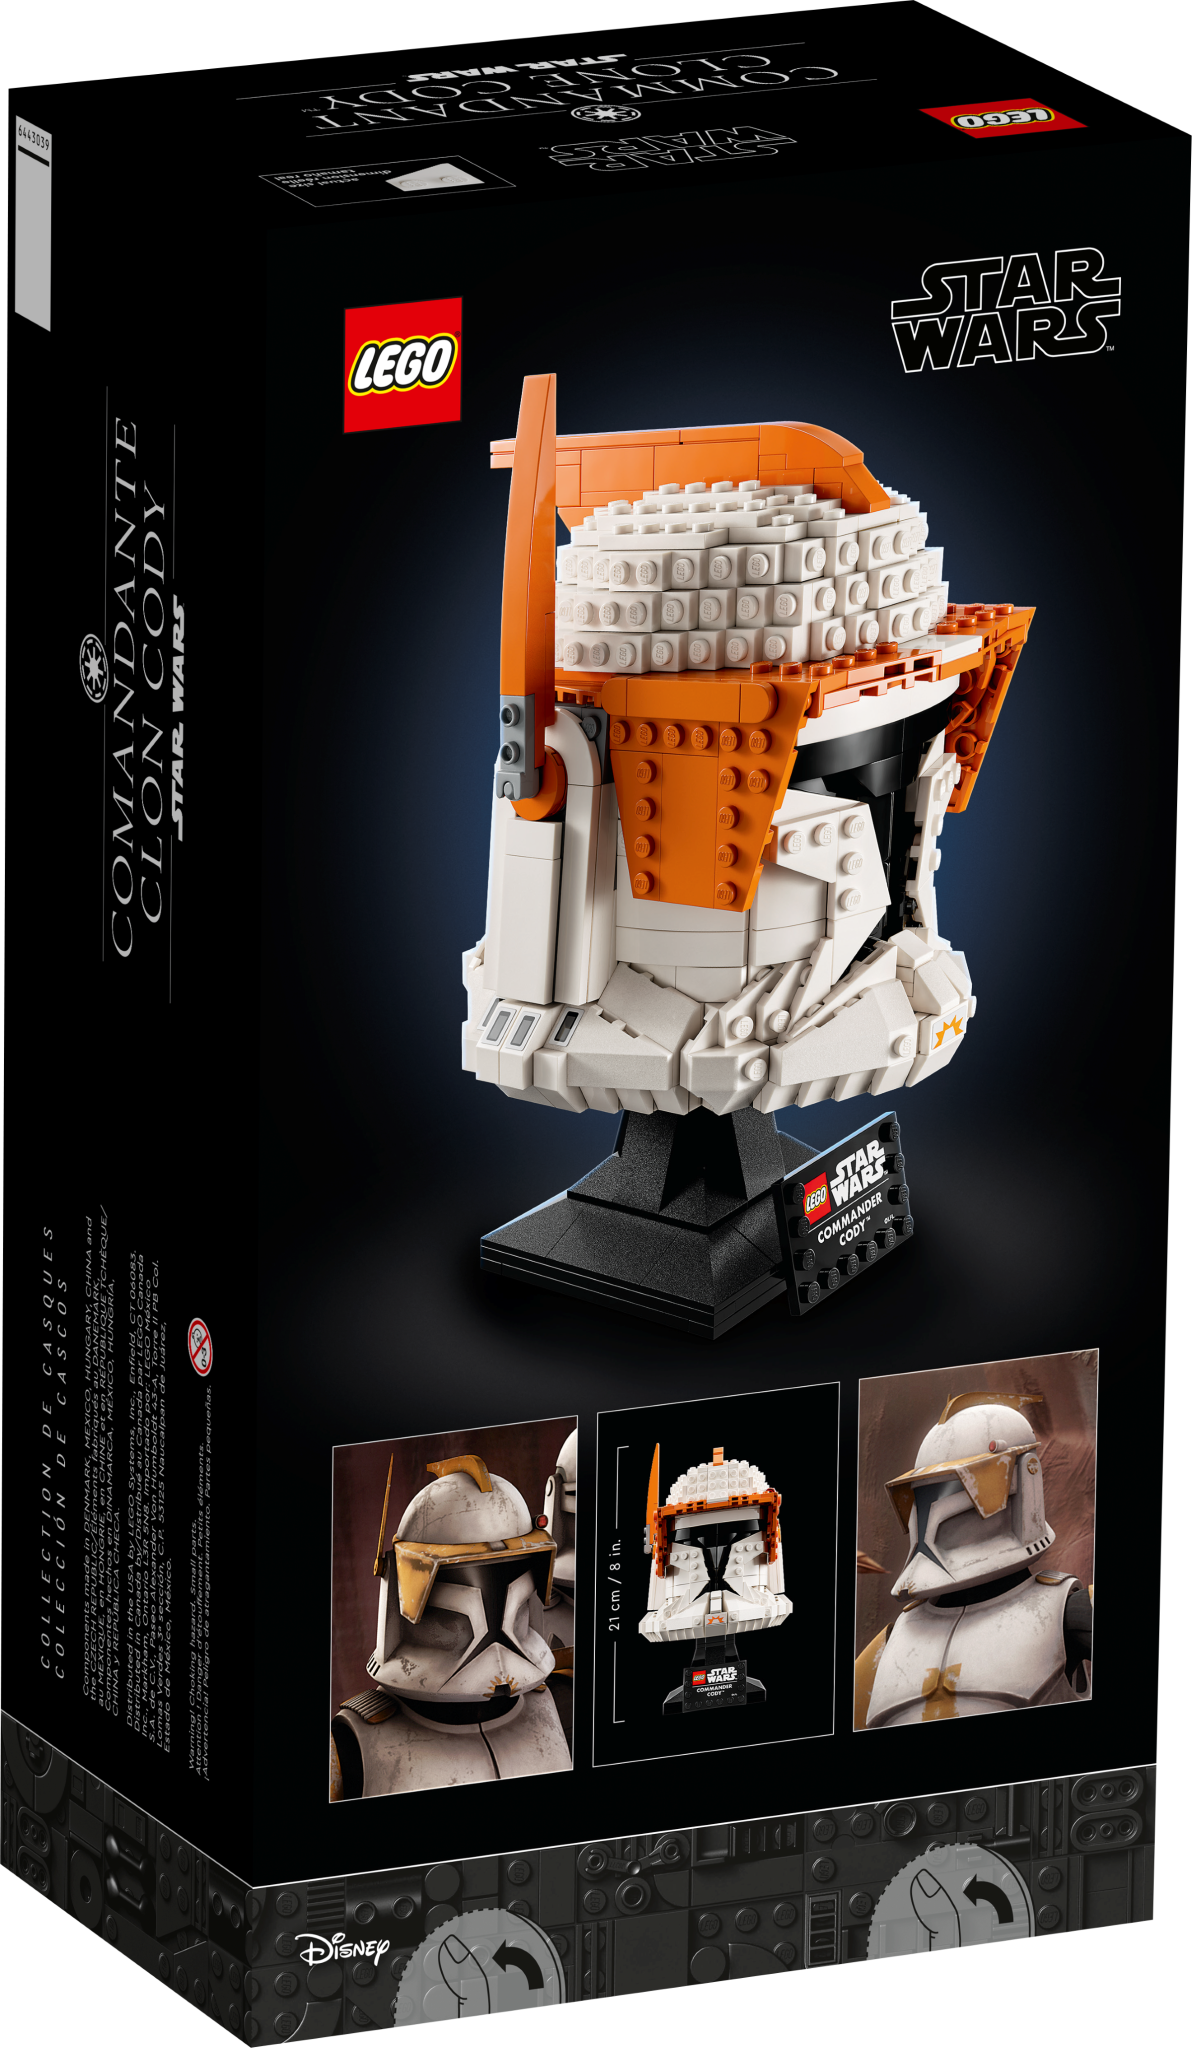 Lego Lego 75350 Star Wars - Le casque du Commandant clone Cody